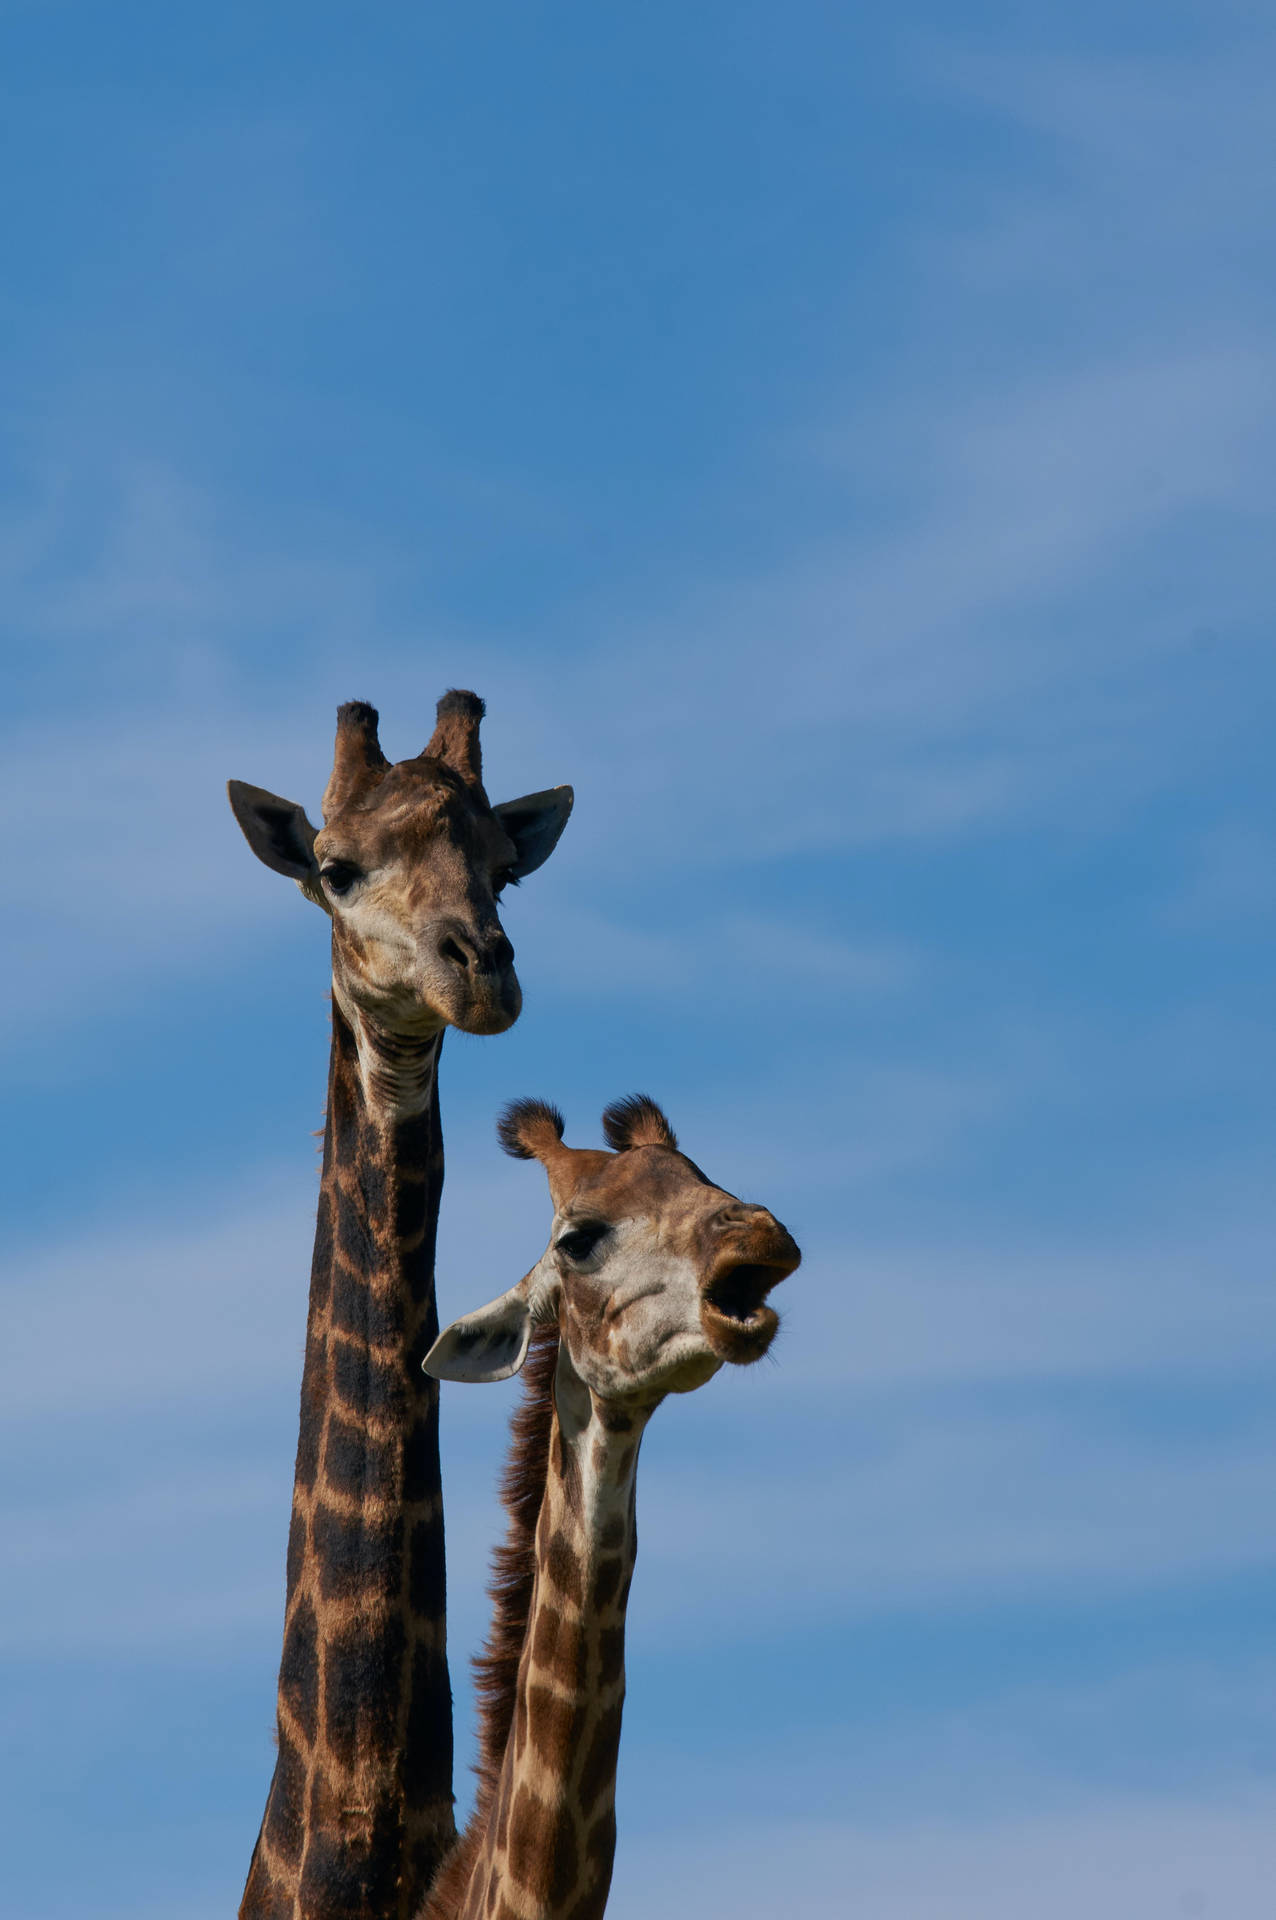 Long-necked Giraffe Humming